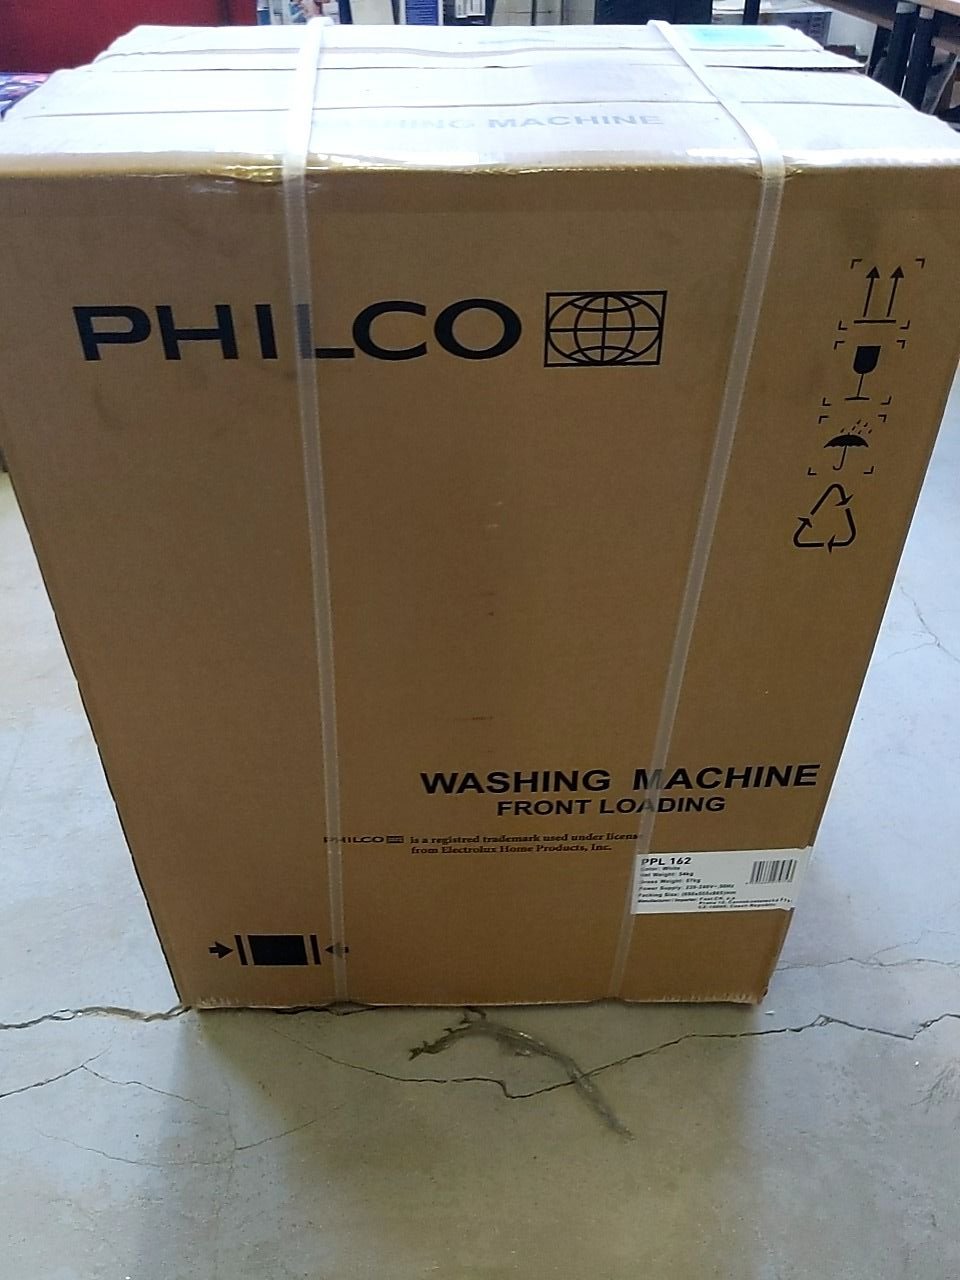 Pračka Philco PPL 162